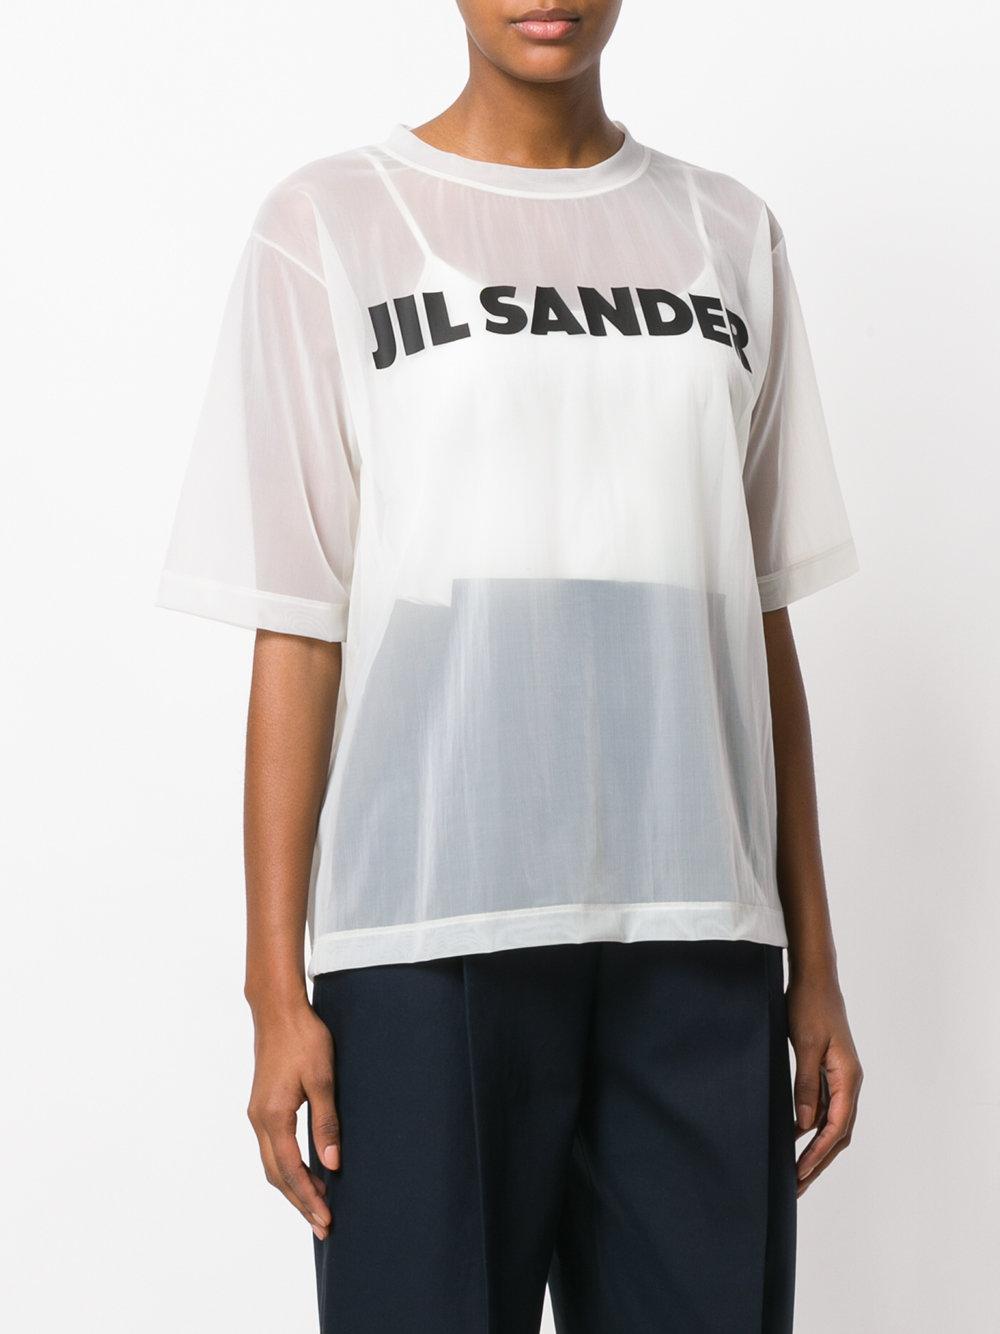 Jil Sander Sheer Logo Patch T-shirt in White | Lyst